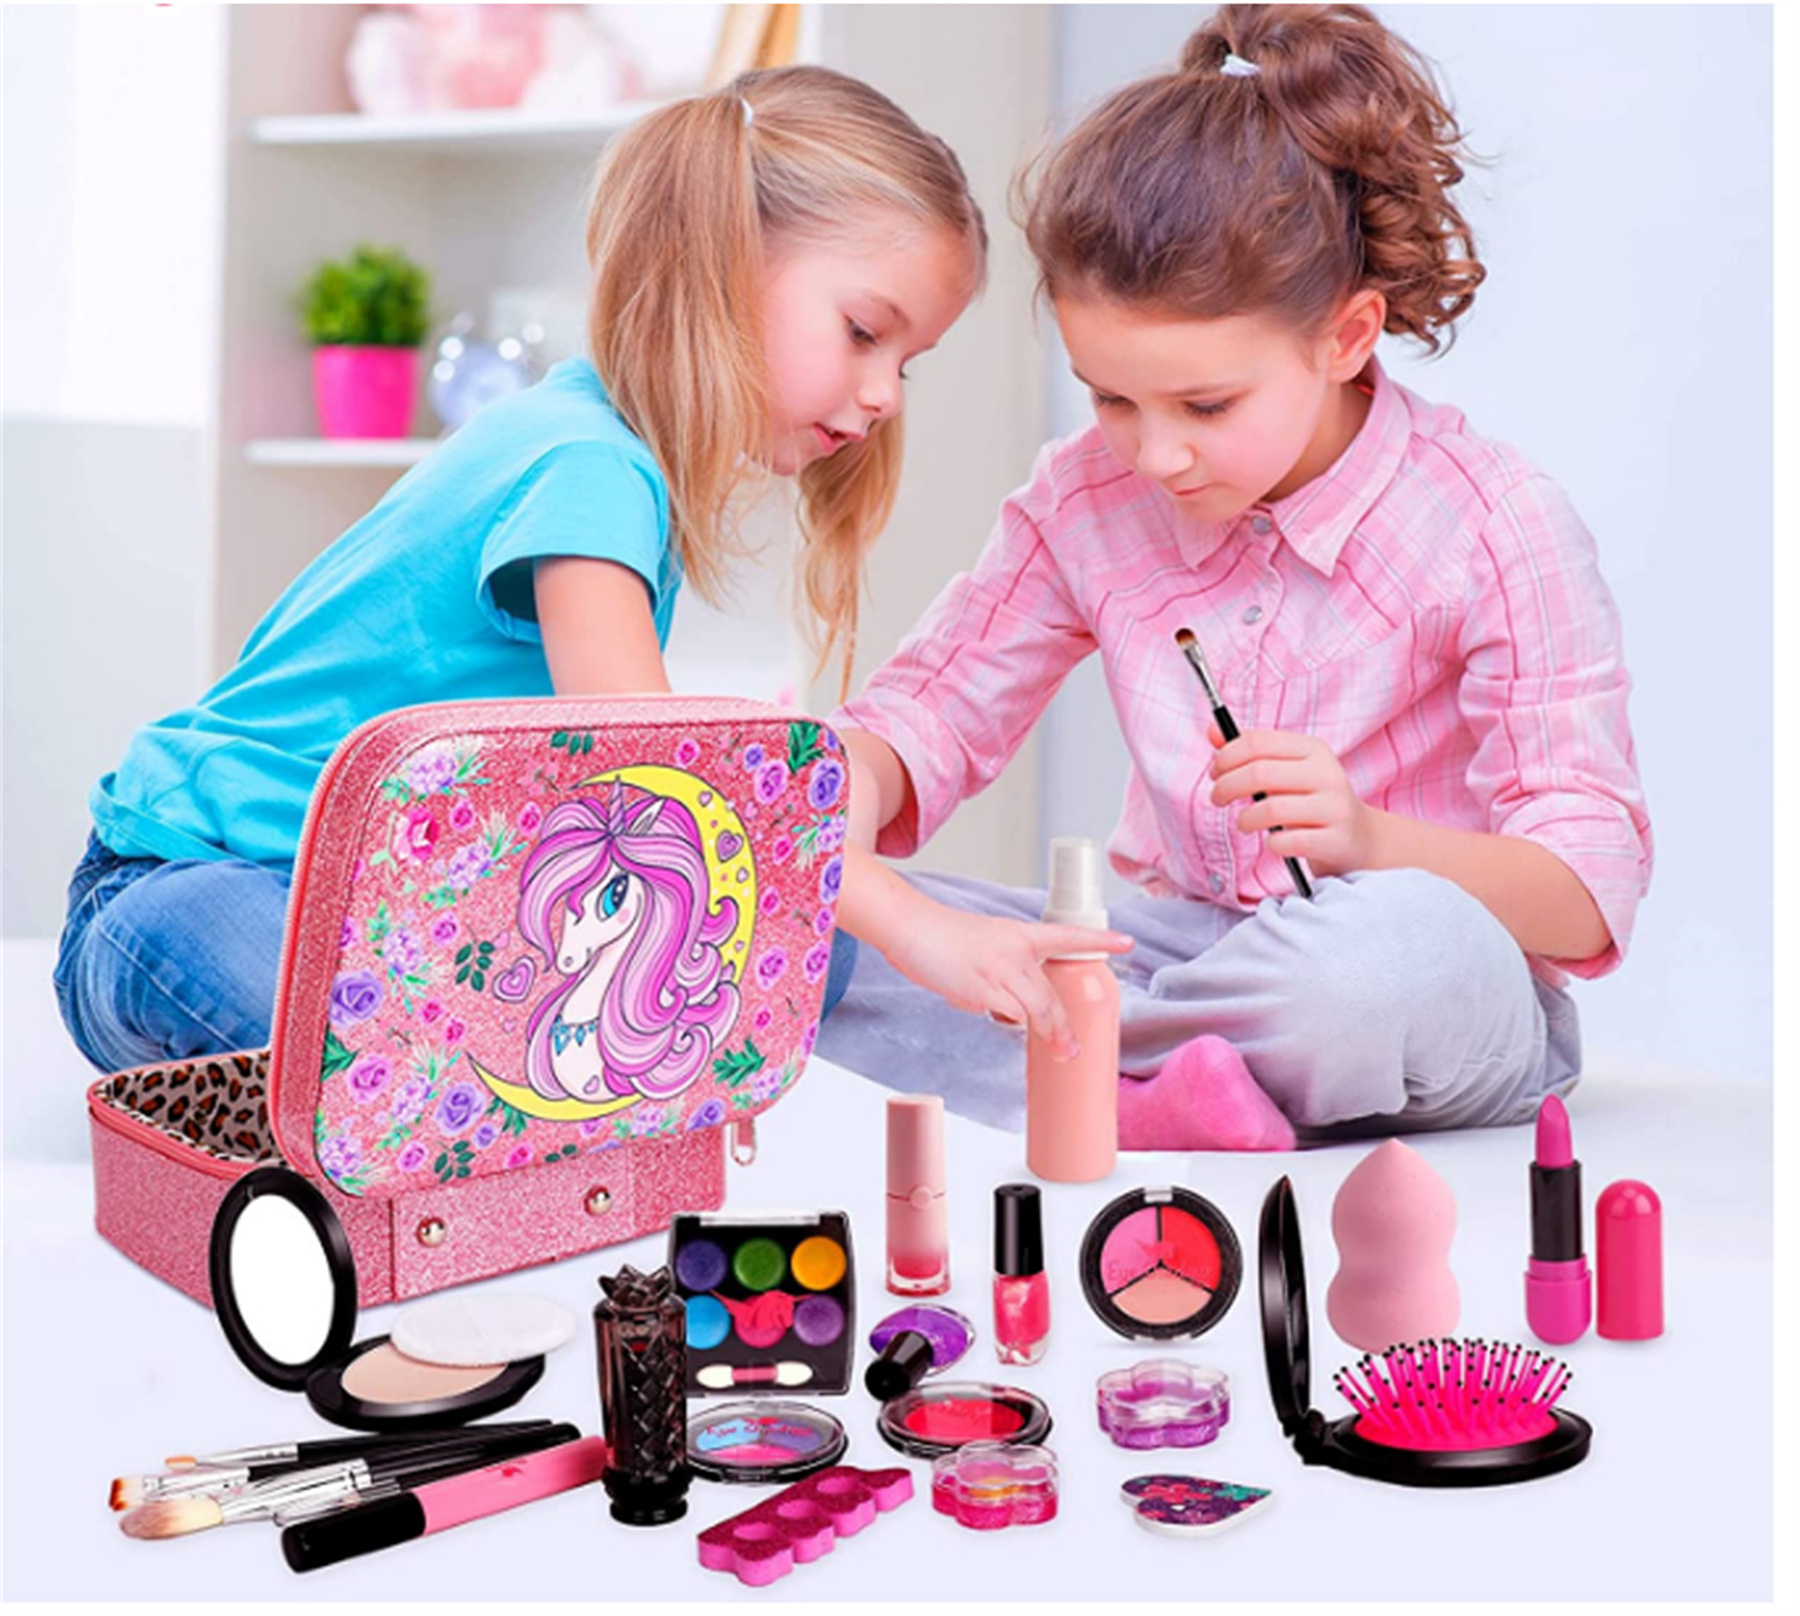 Kids Makeup Kit for Girl - Makeup for Kids, Washable Makeup Toys